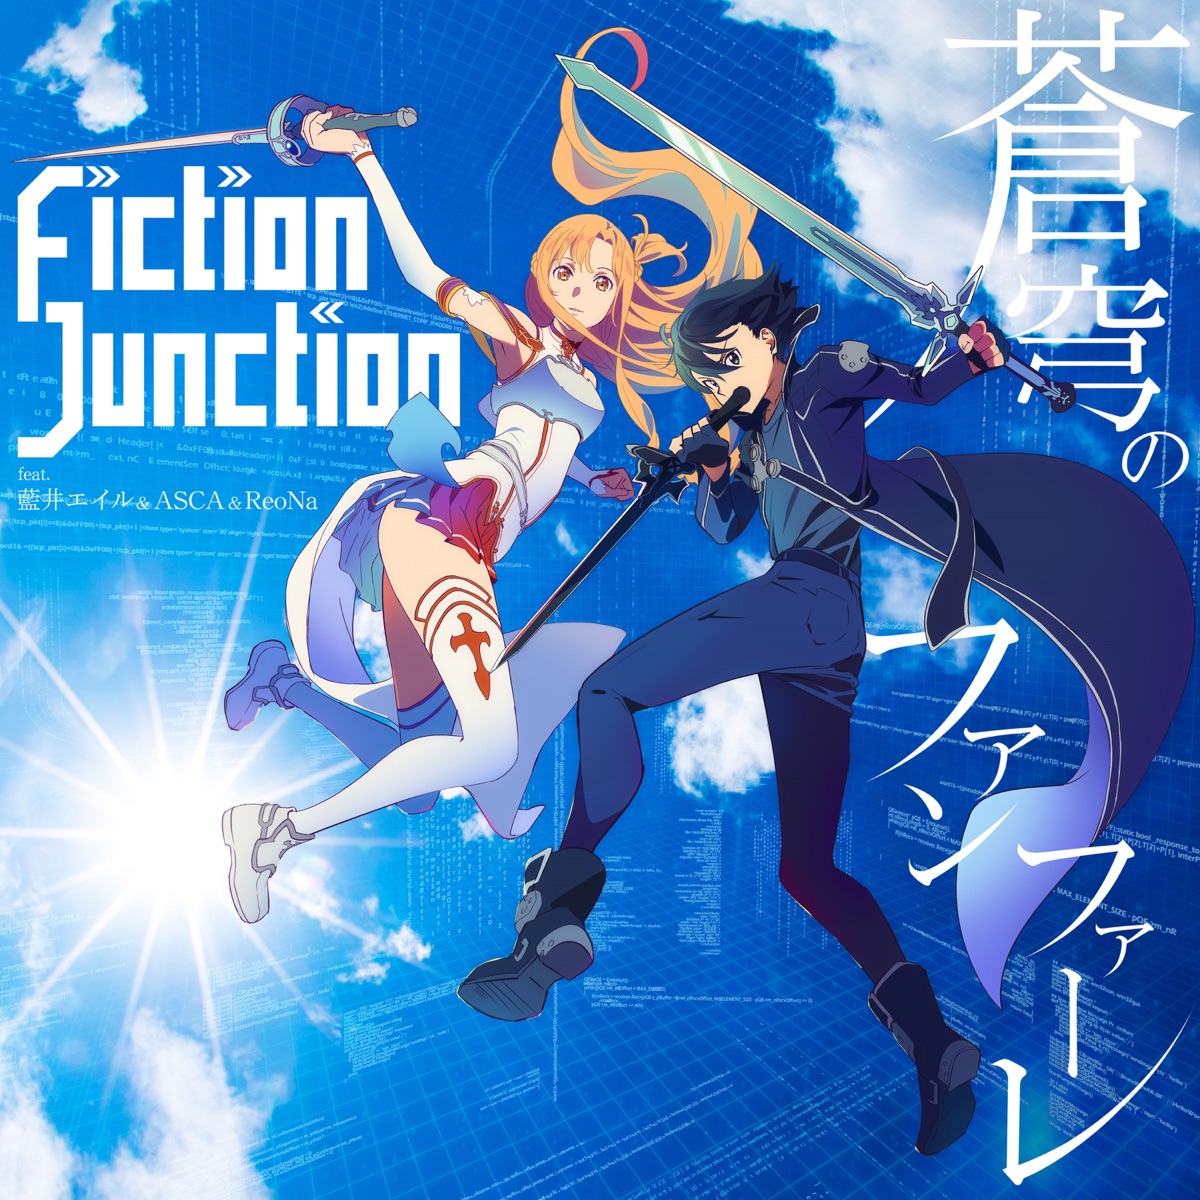 『FictionJunction feat. 藍井エイル & ASCA & ReoNa - 蒼穹のファンファーレ 歌詞』収録の『蒼穹のファンファーレ』ジャケット